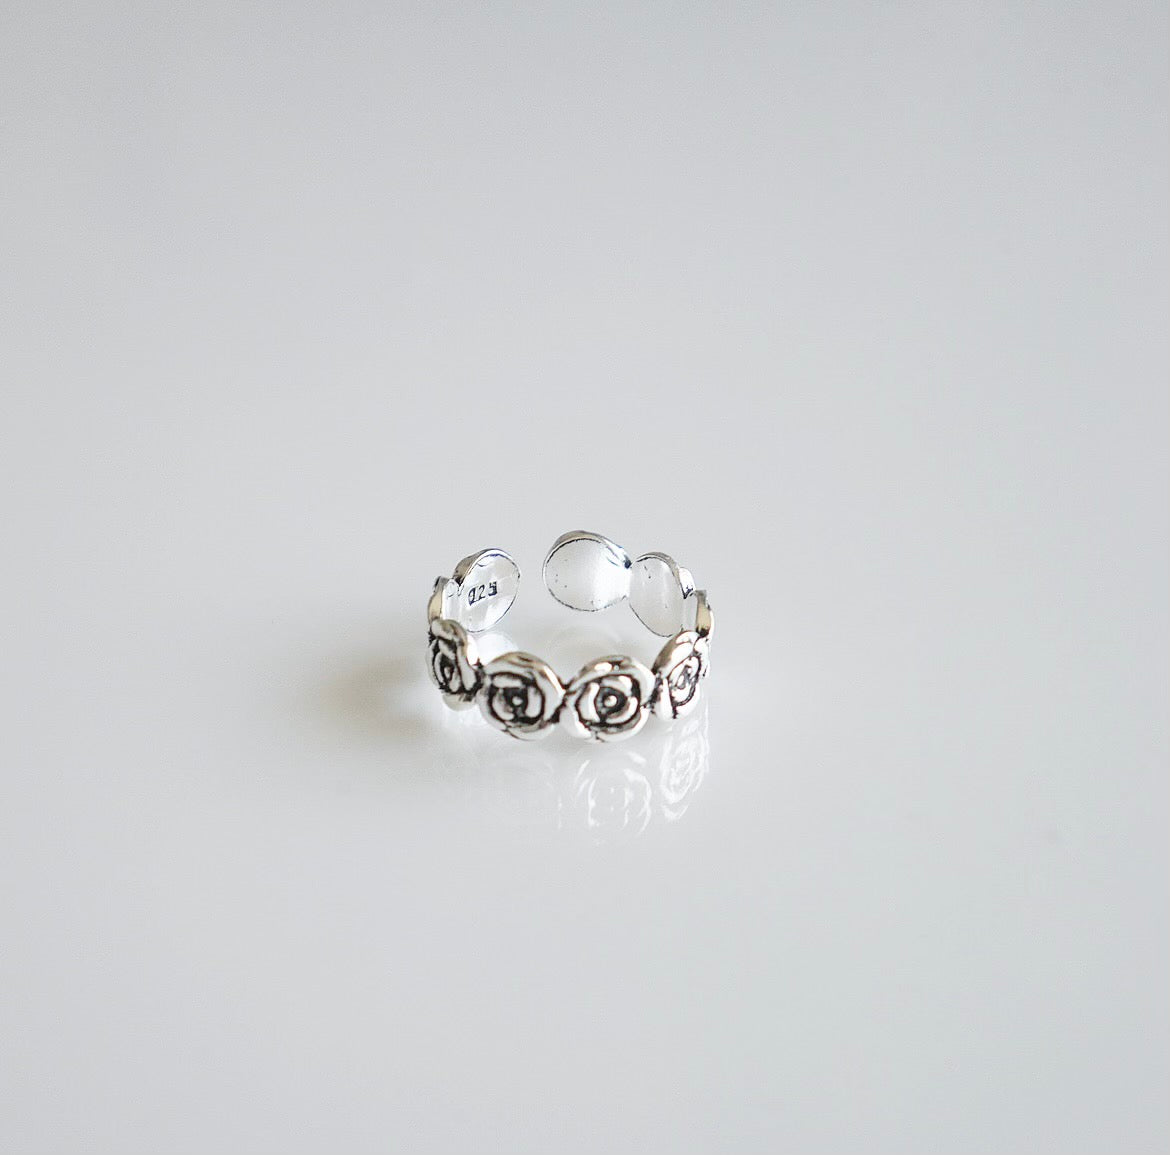 Rose Design Adjustable Toe Ring/Middy .925 sterling silver Ring